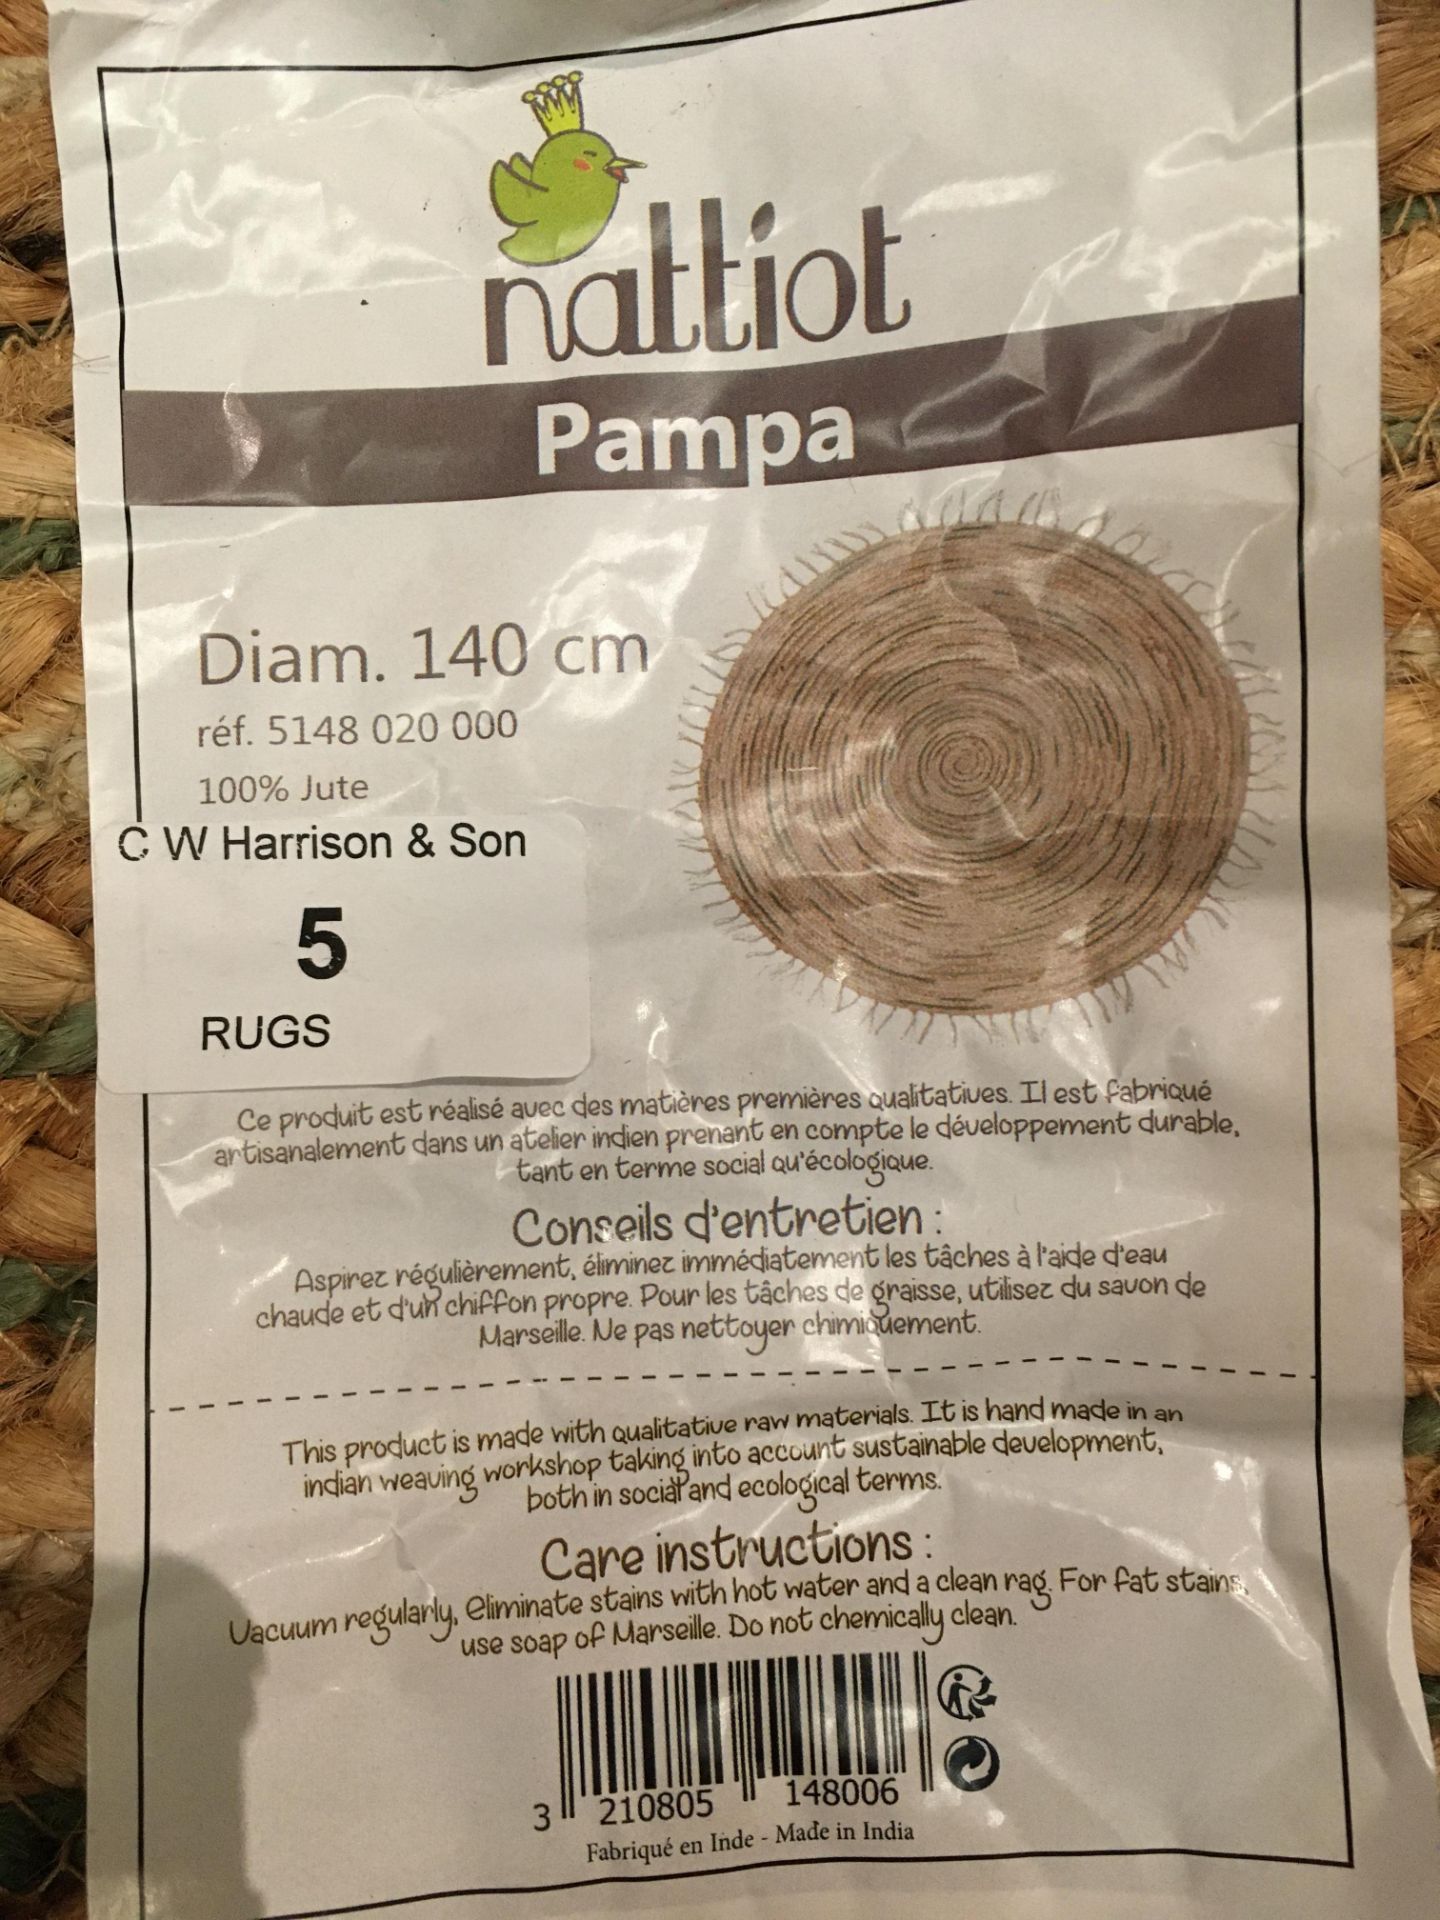 A Nattiot Pampa circular 100% jute rug - - Image 2 of 2